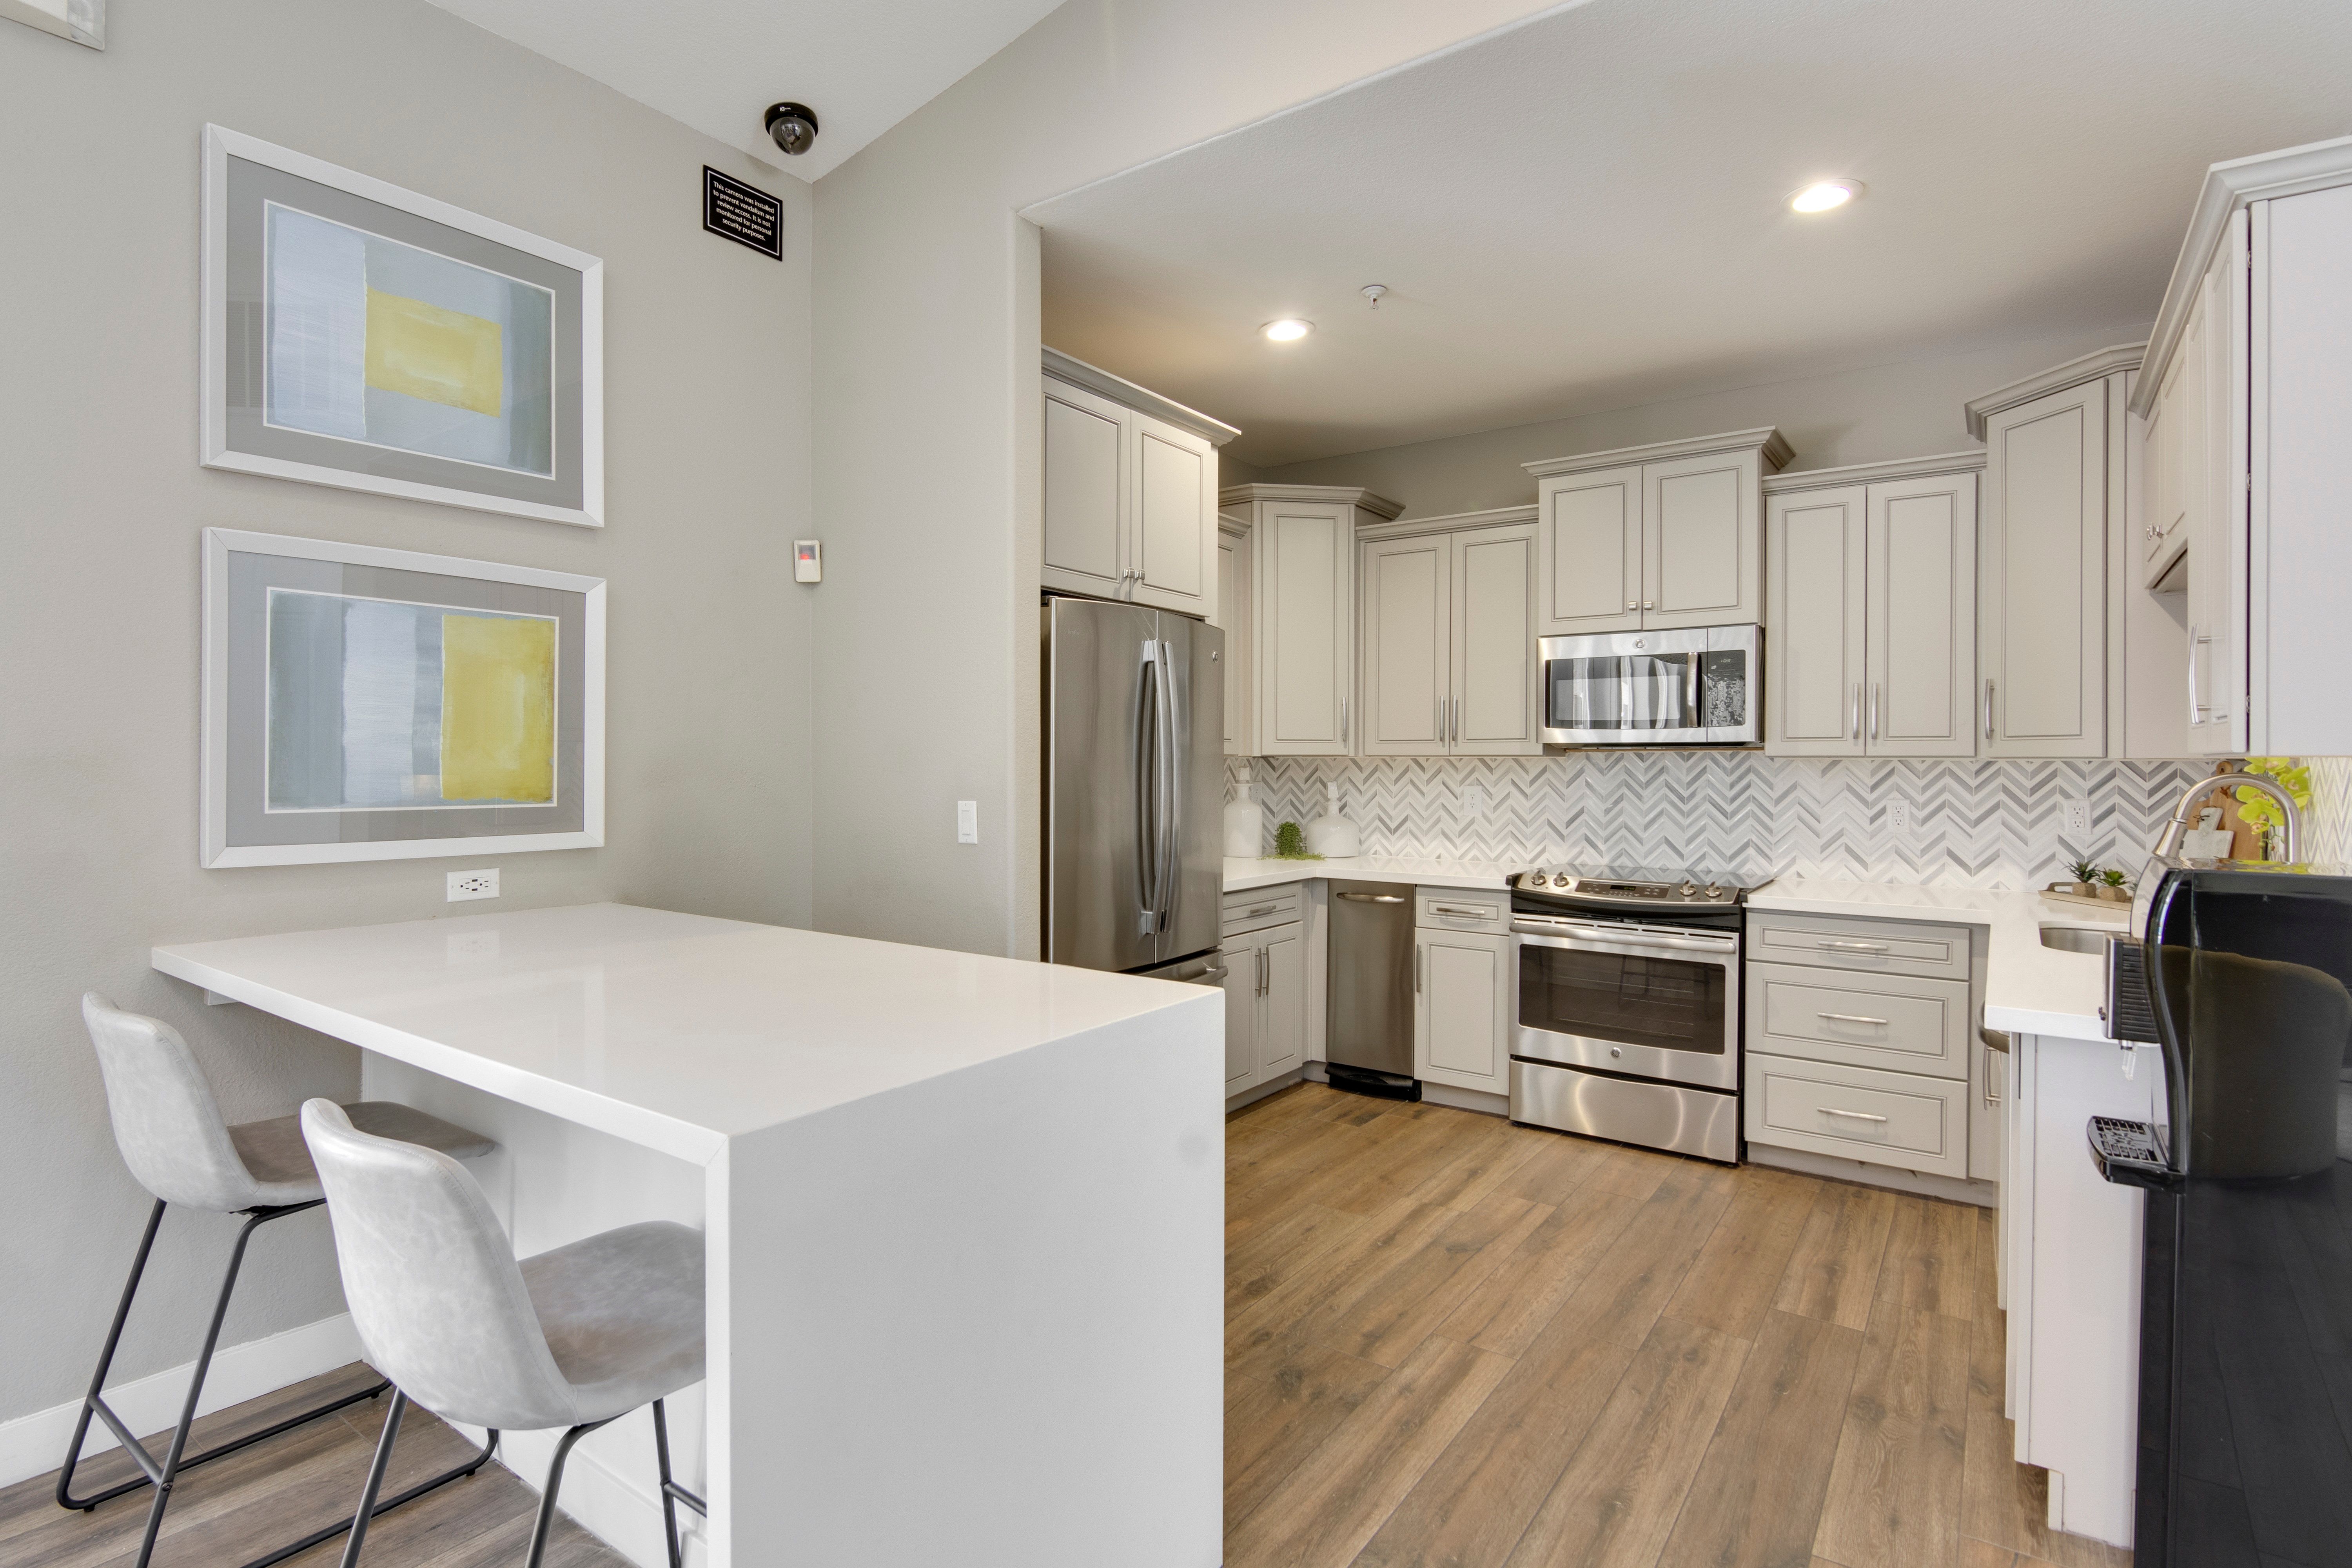 Modern and stylish kitchen at Ocotillo Bay Apartments in Chandler, Arizona